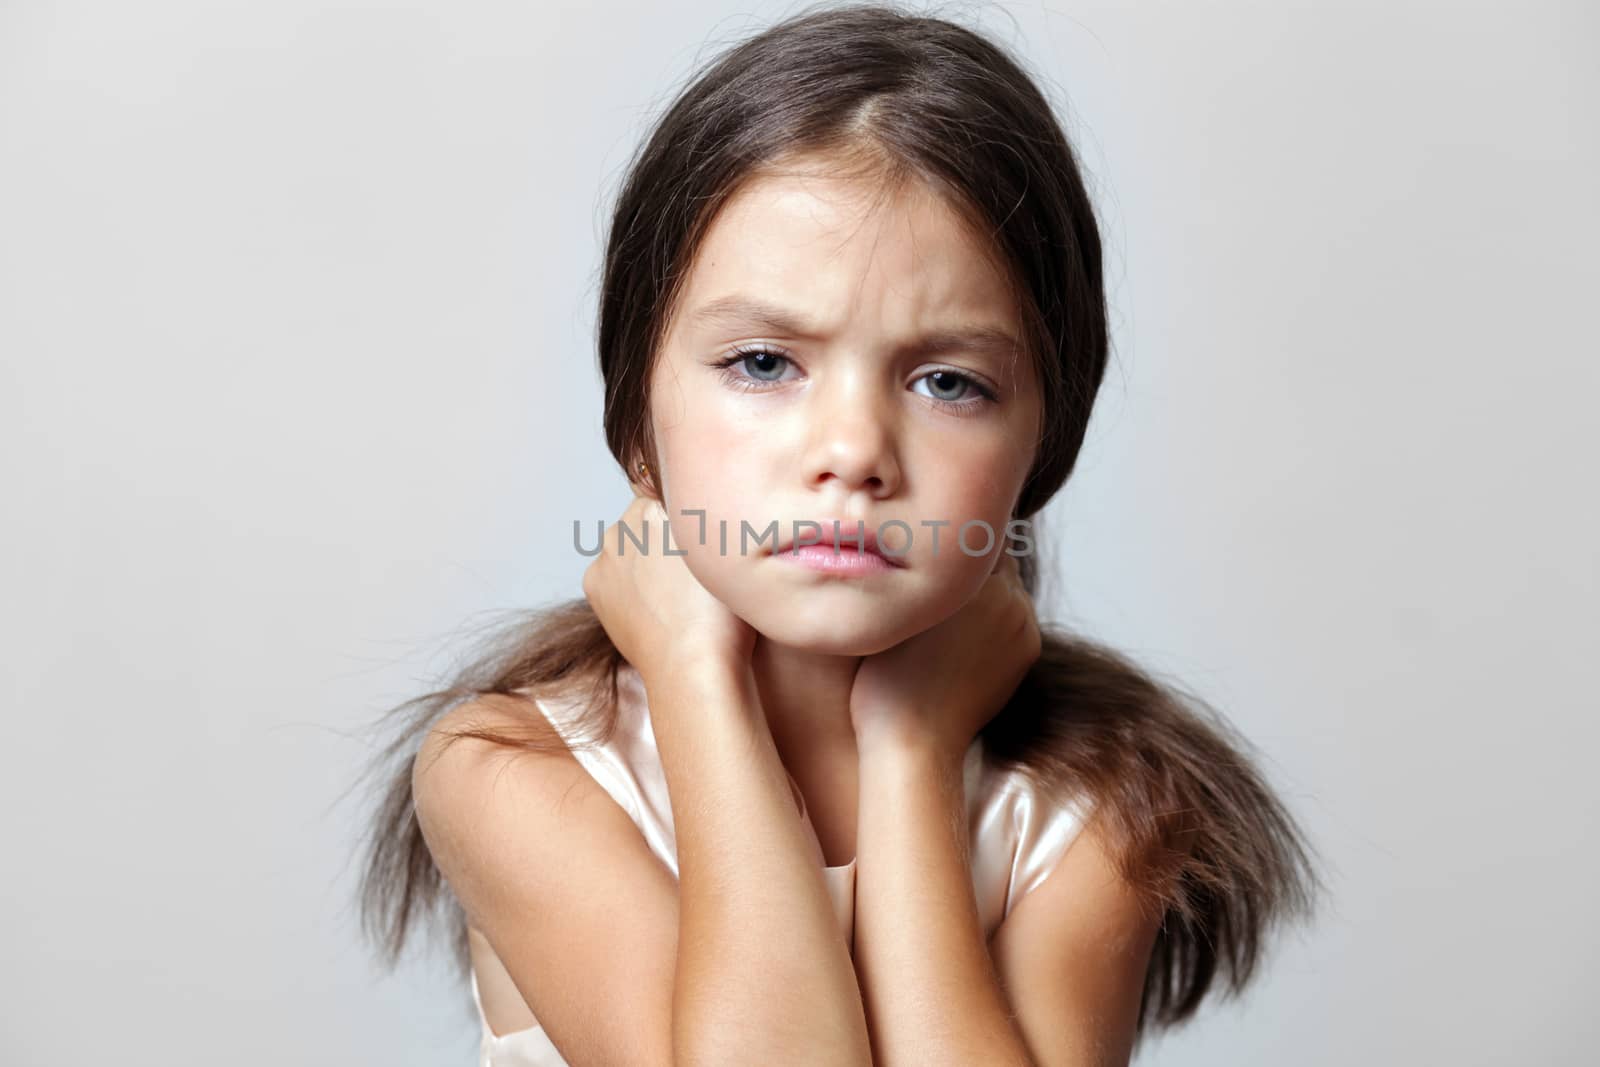 sad little girl by andersonrise